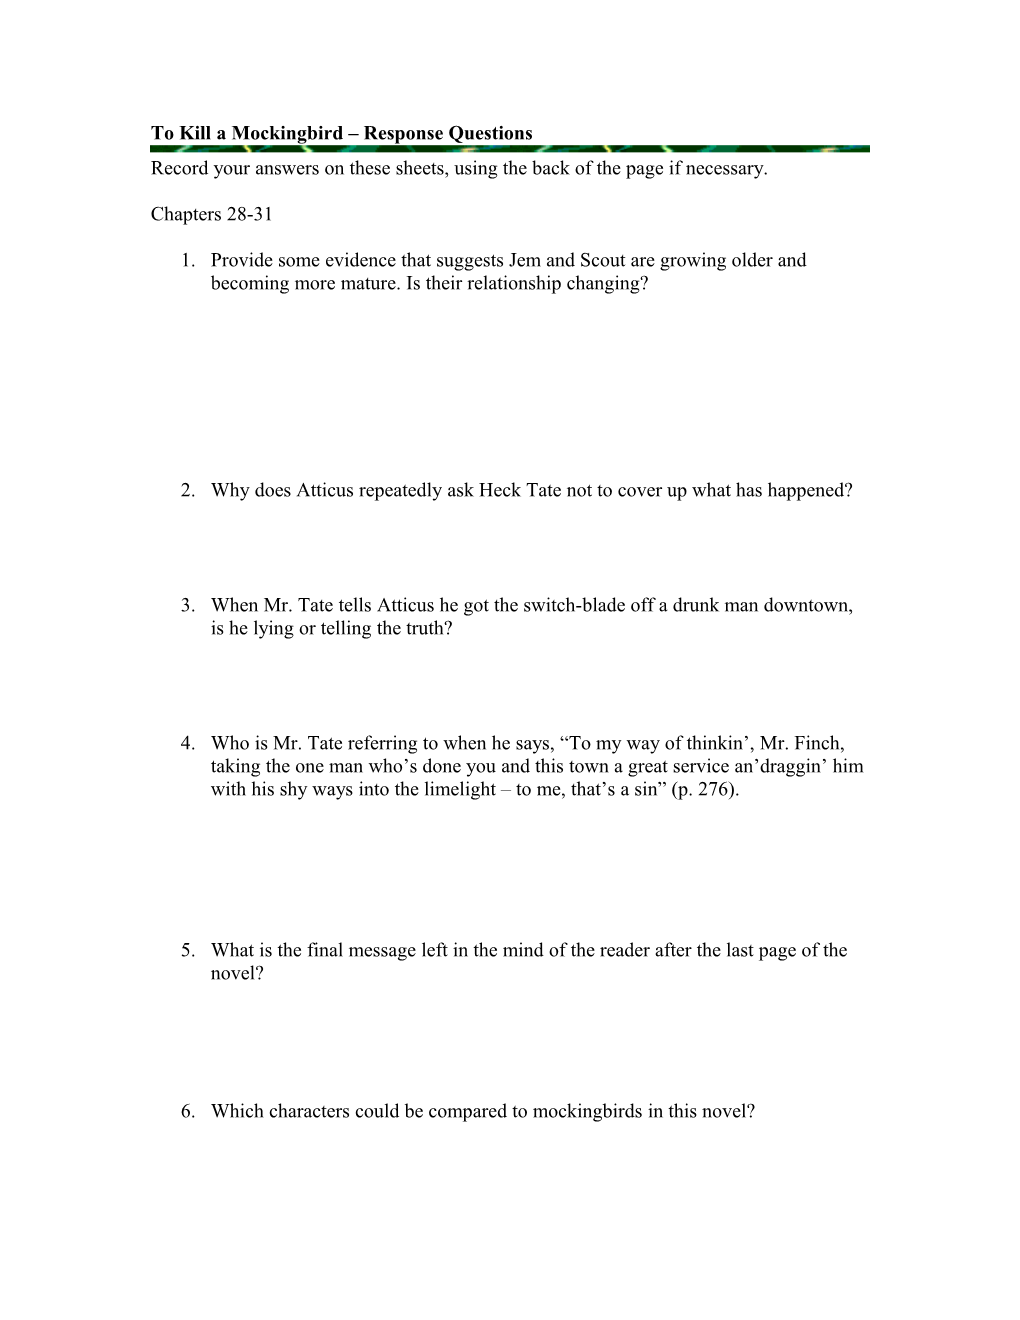 To Kill a Mockingbird Response Questions